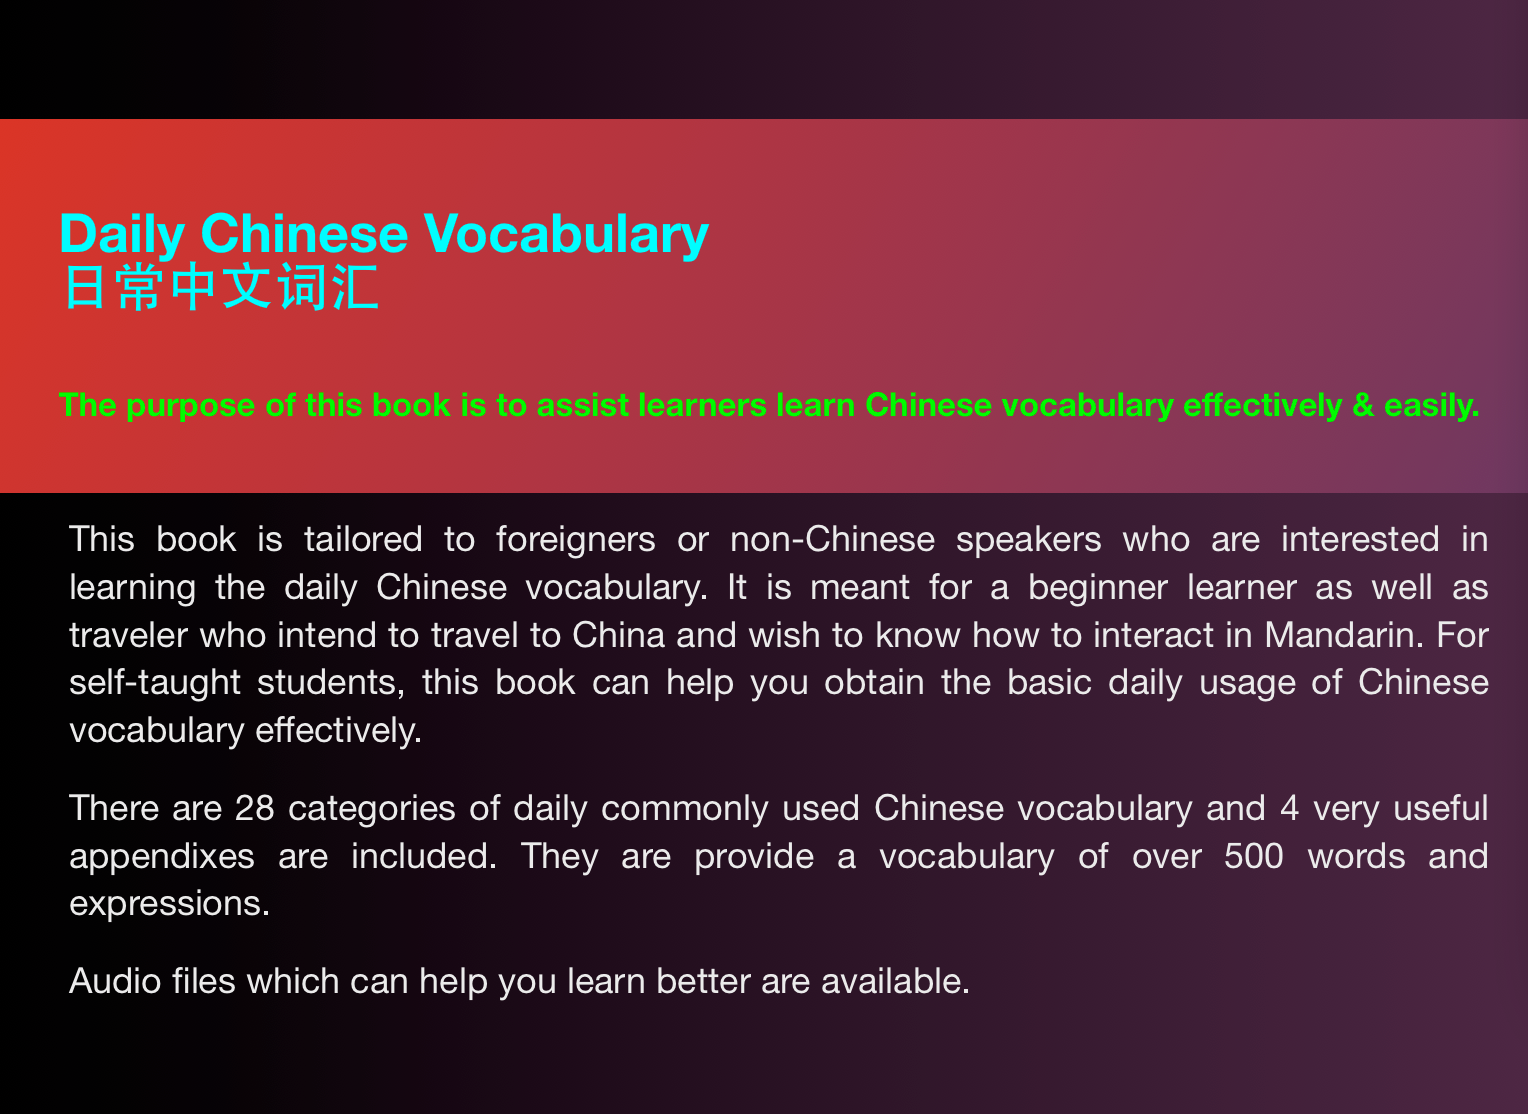 Daily Chinese Vocabulary (EBOOK)